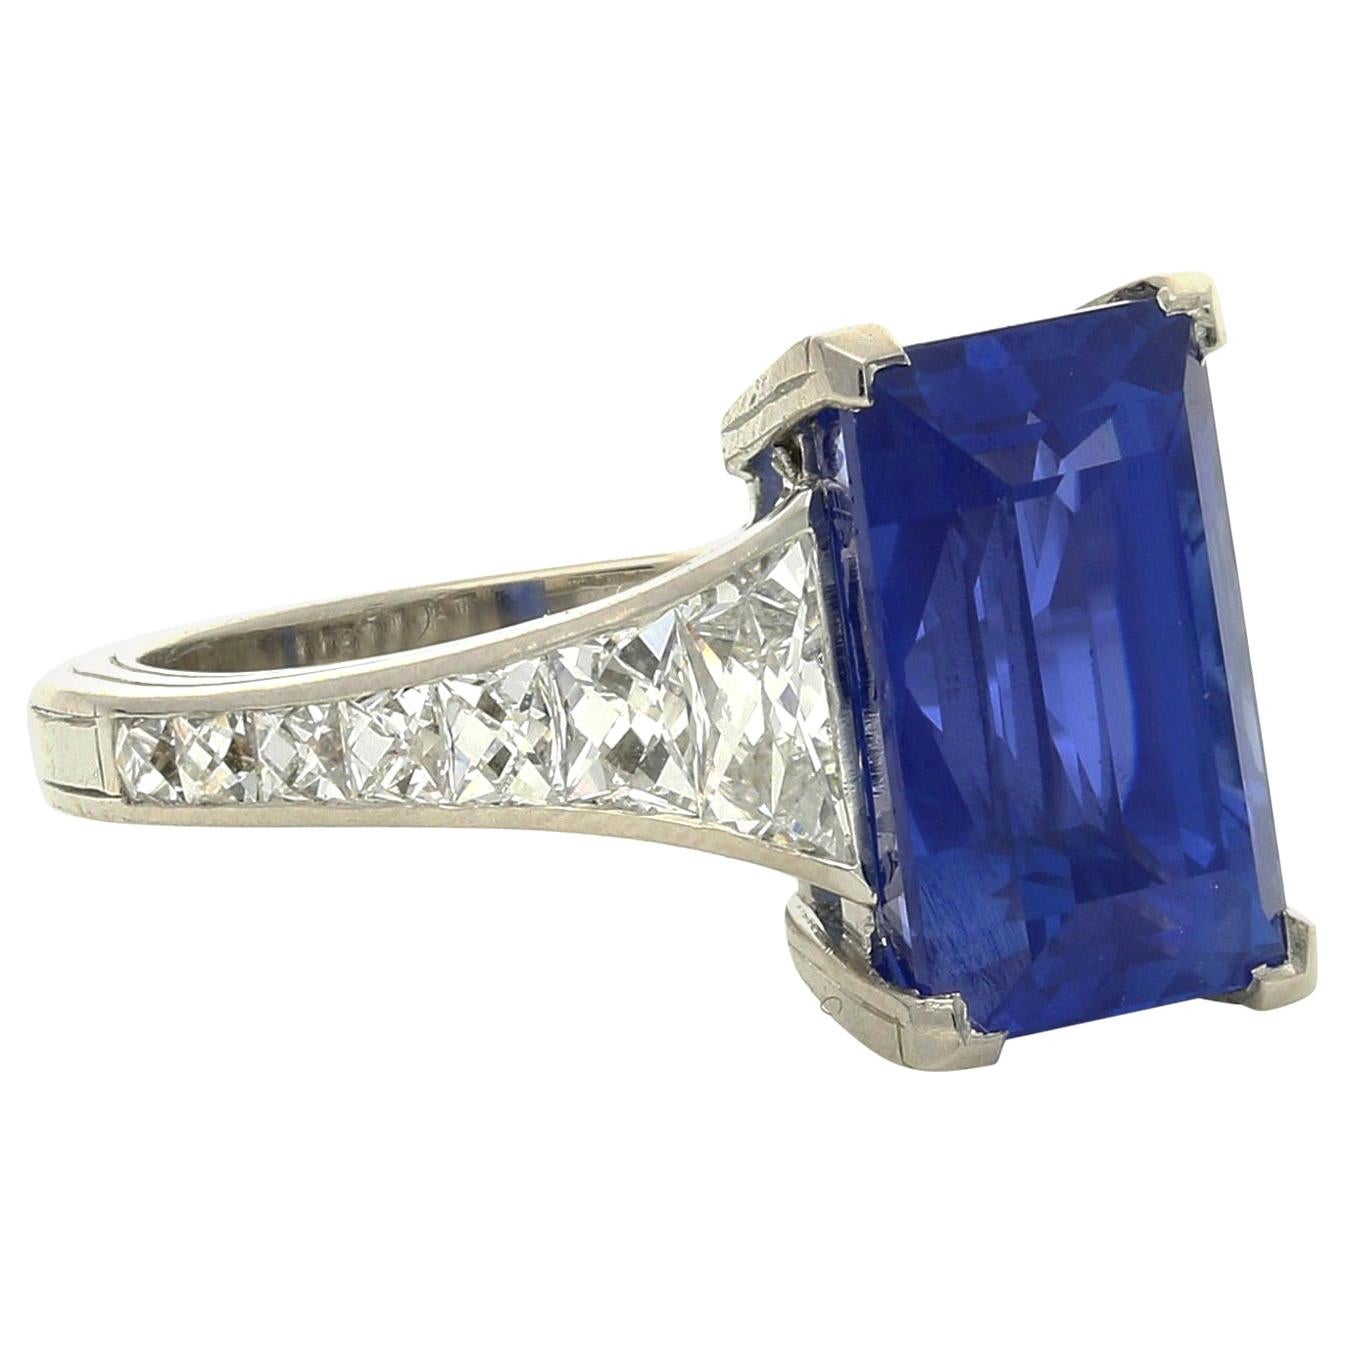 6.61ct Unheated Ceylon Sapphire with French-Cut Diamond Shoulder Platinum Ring